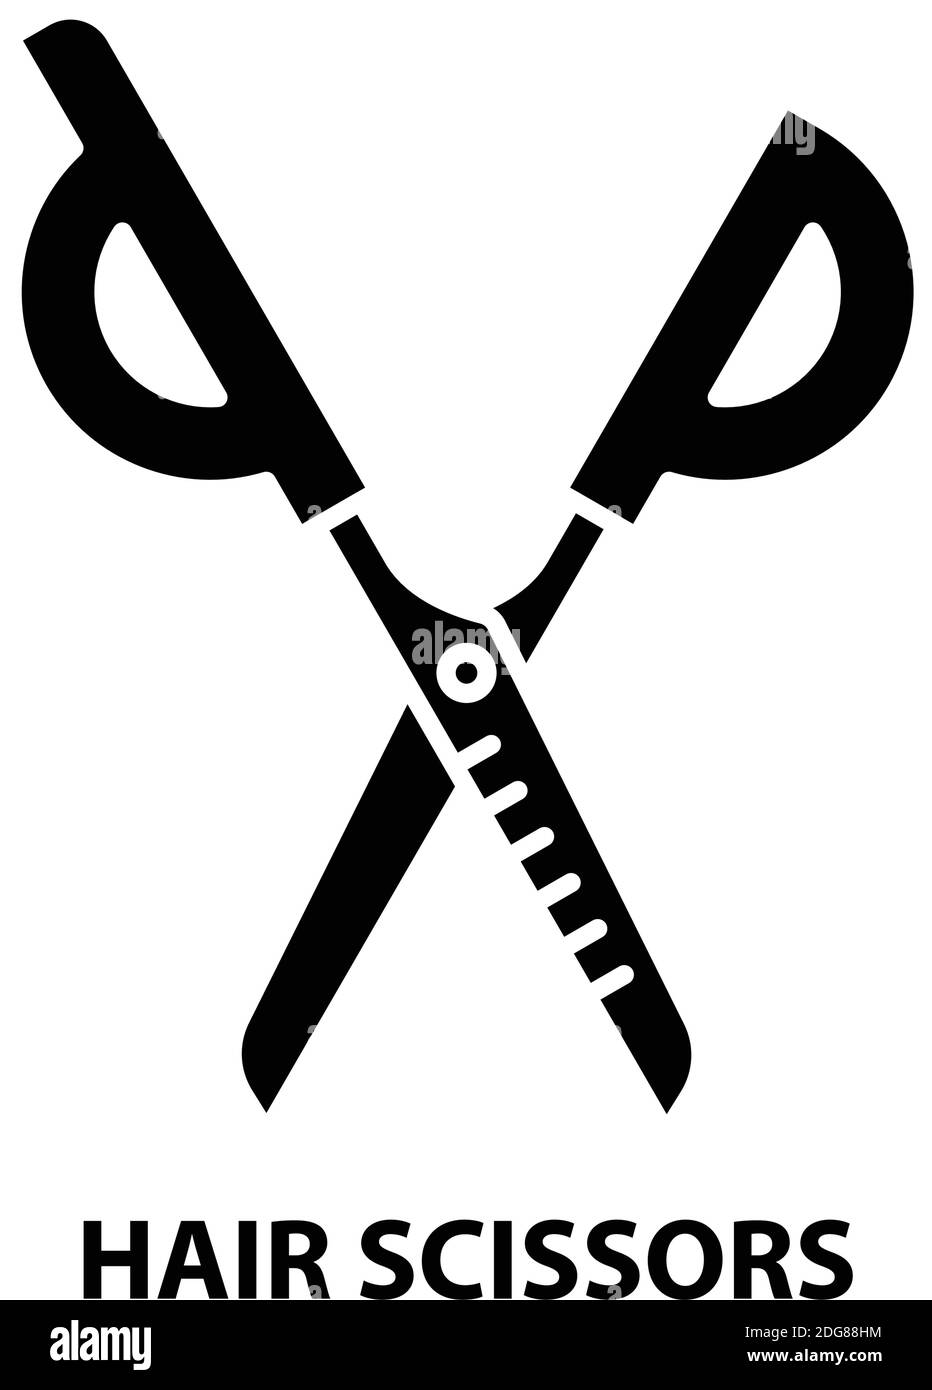 hair scissors icon, black vector sign with editable strokes, concept illustration Stock Vector